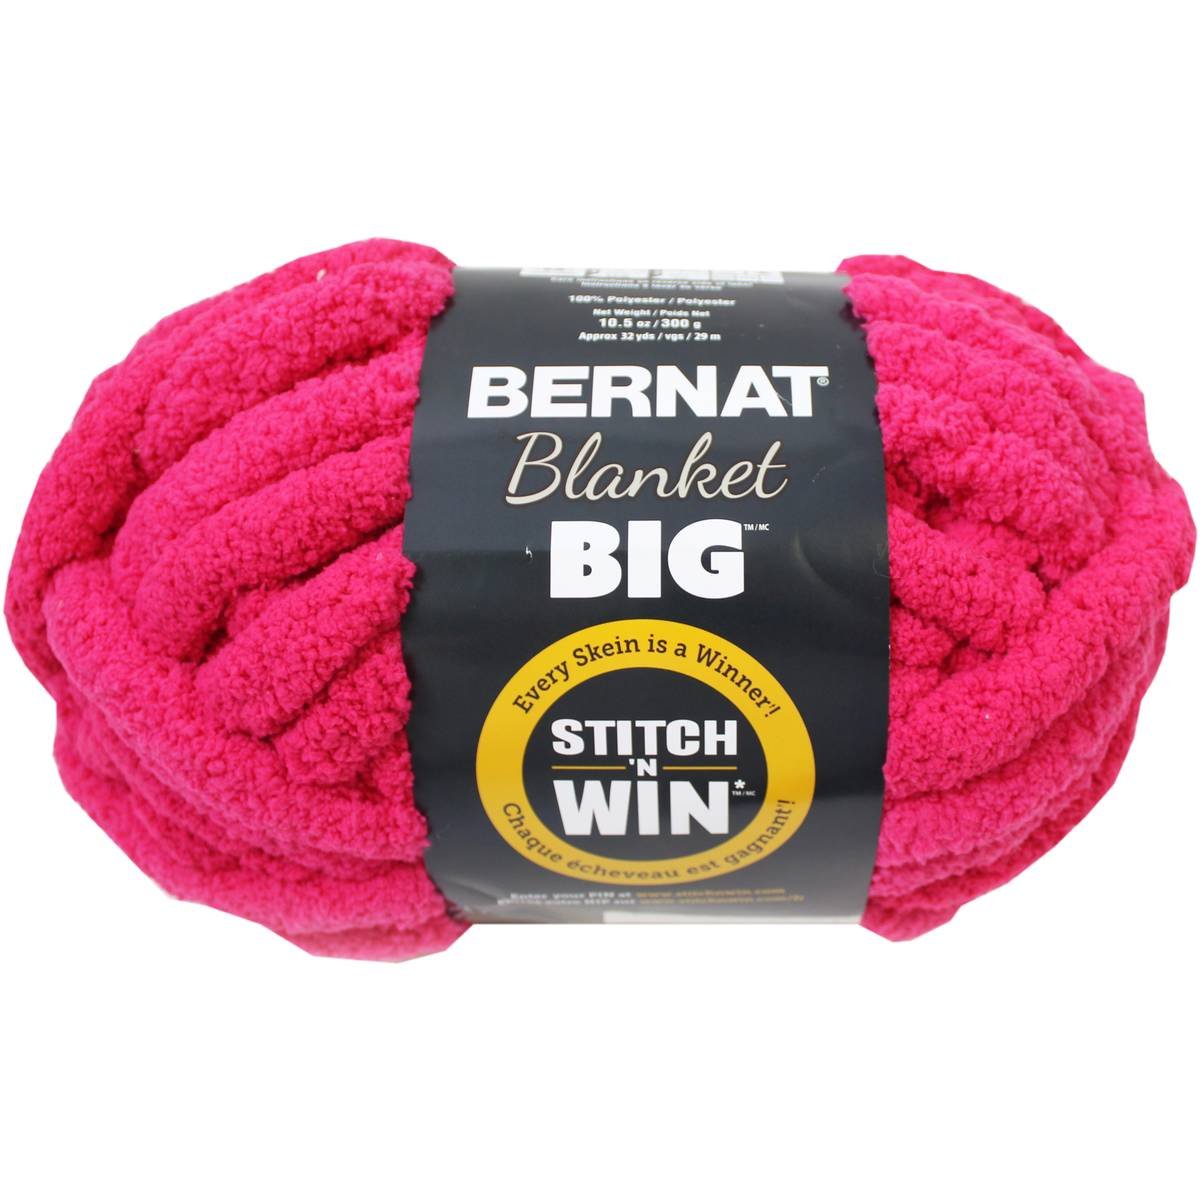 Bernat Blanket Big Yarn (300g/10.5oz),Taupe Gray